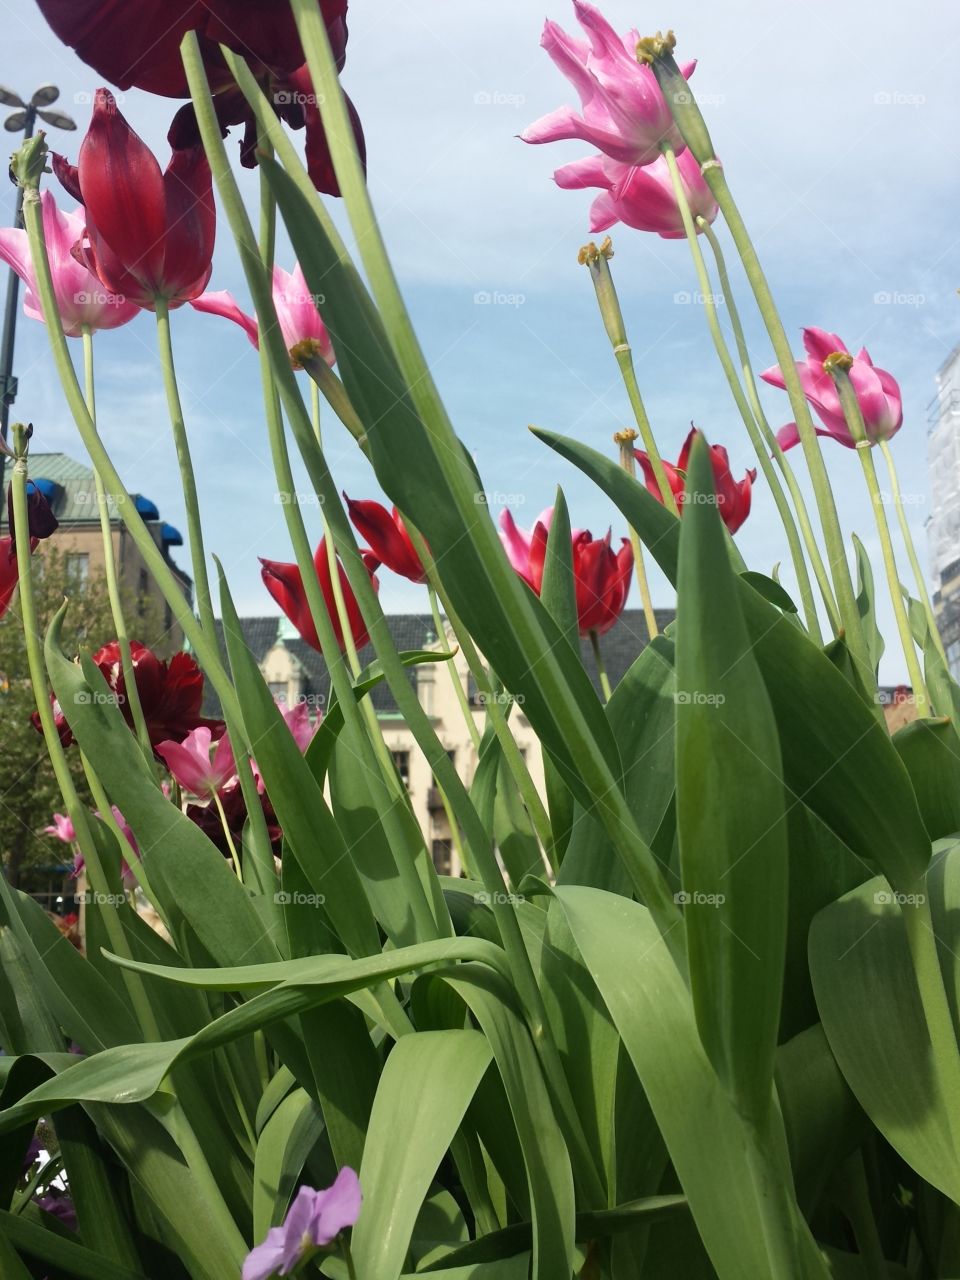 City Square Tulips